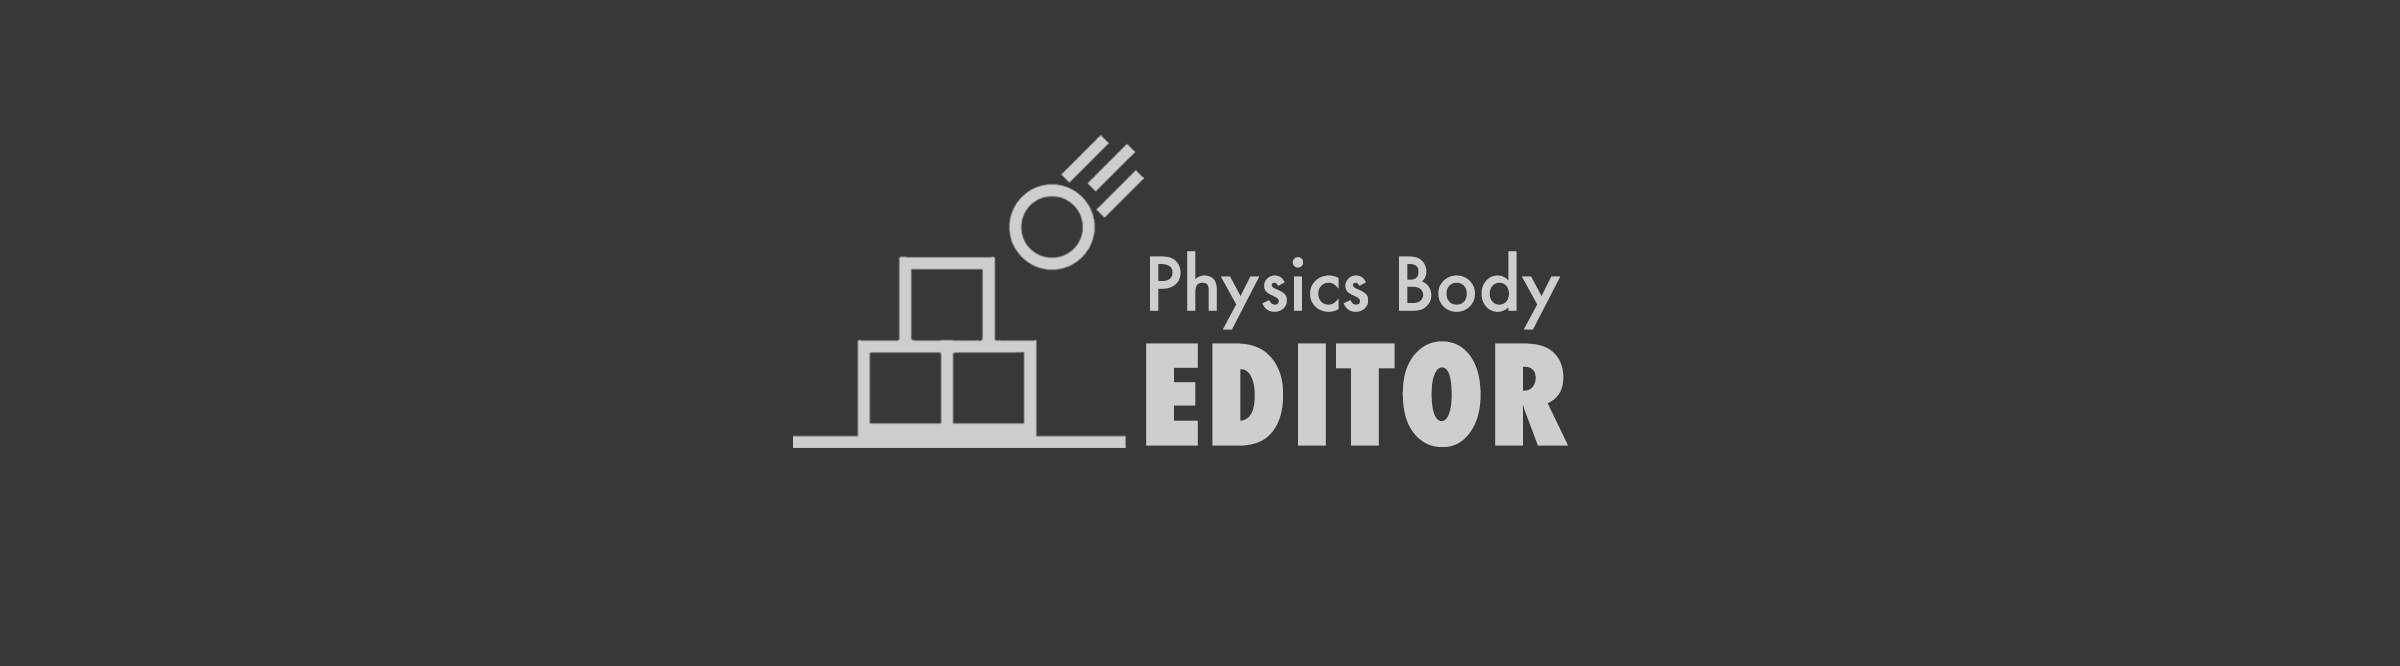 Physics Body Editor